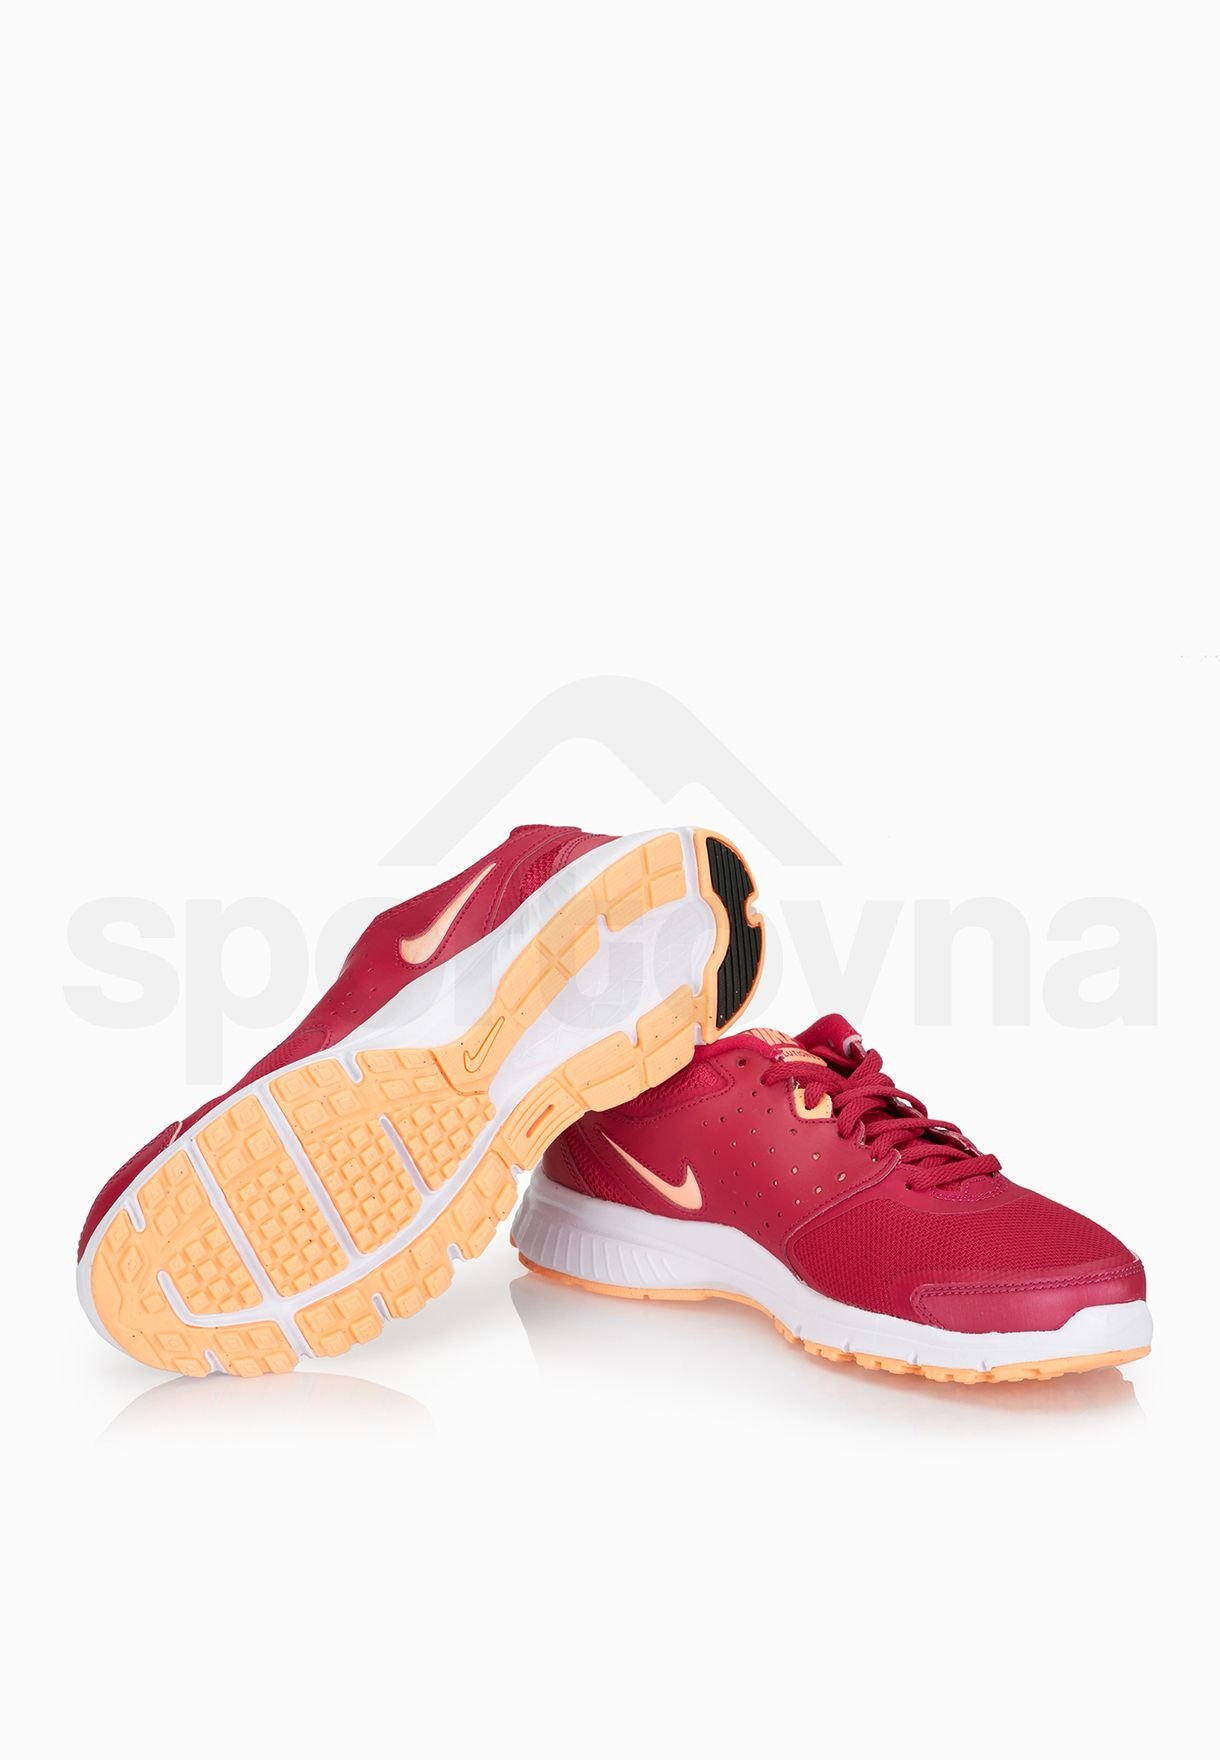 Běžecká obuv Nike Revolution EU -3631210 - korálová